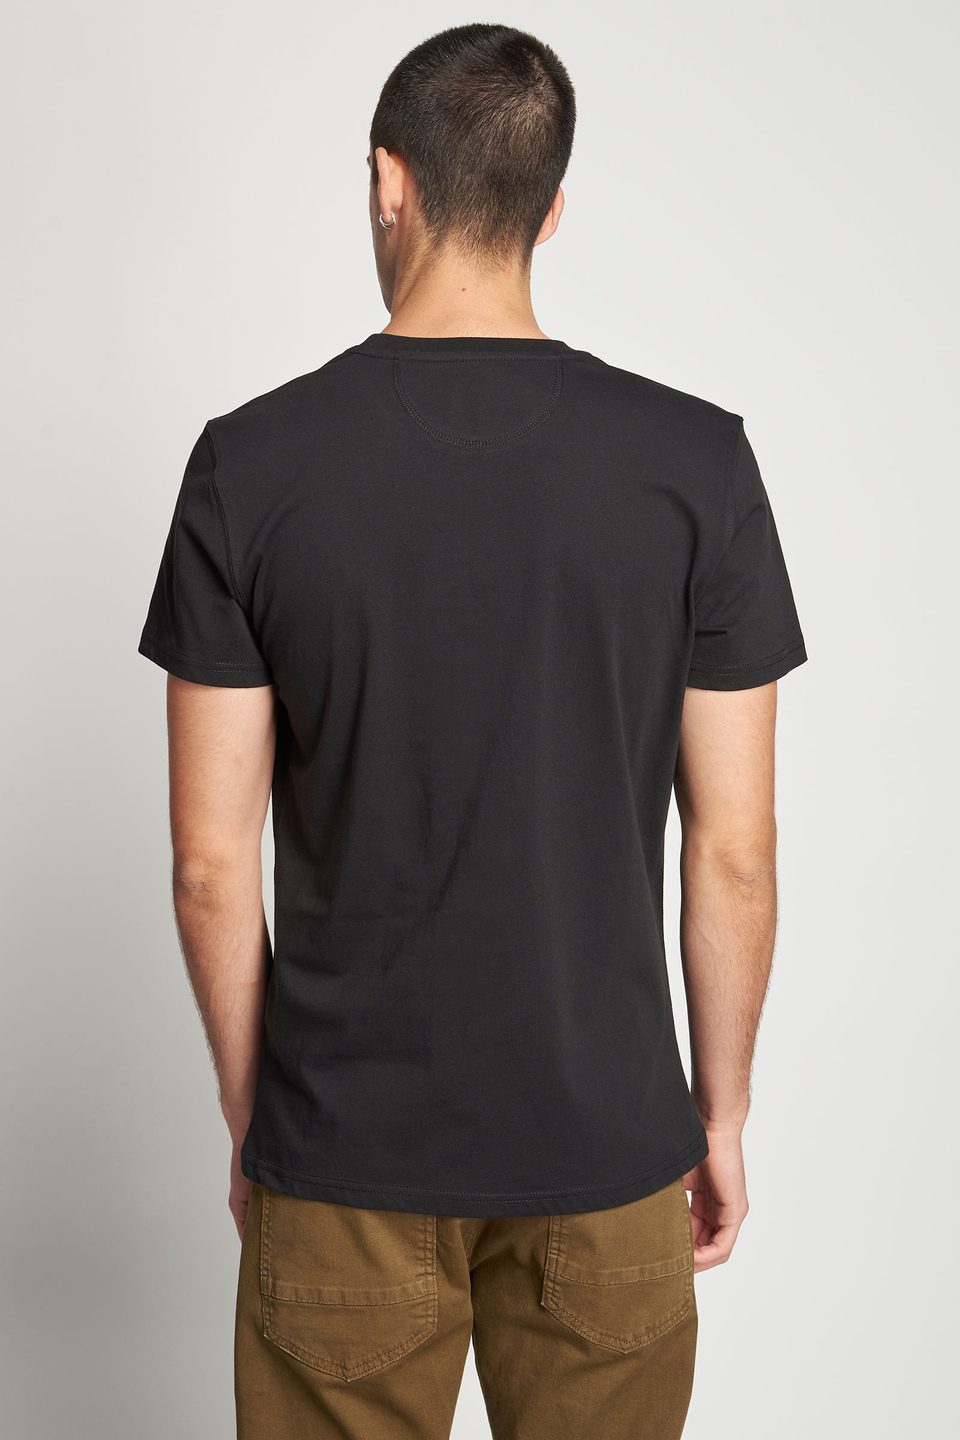 Men's T-shirts in a regular fit - Serge | La Martina - Official Online Shop